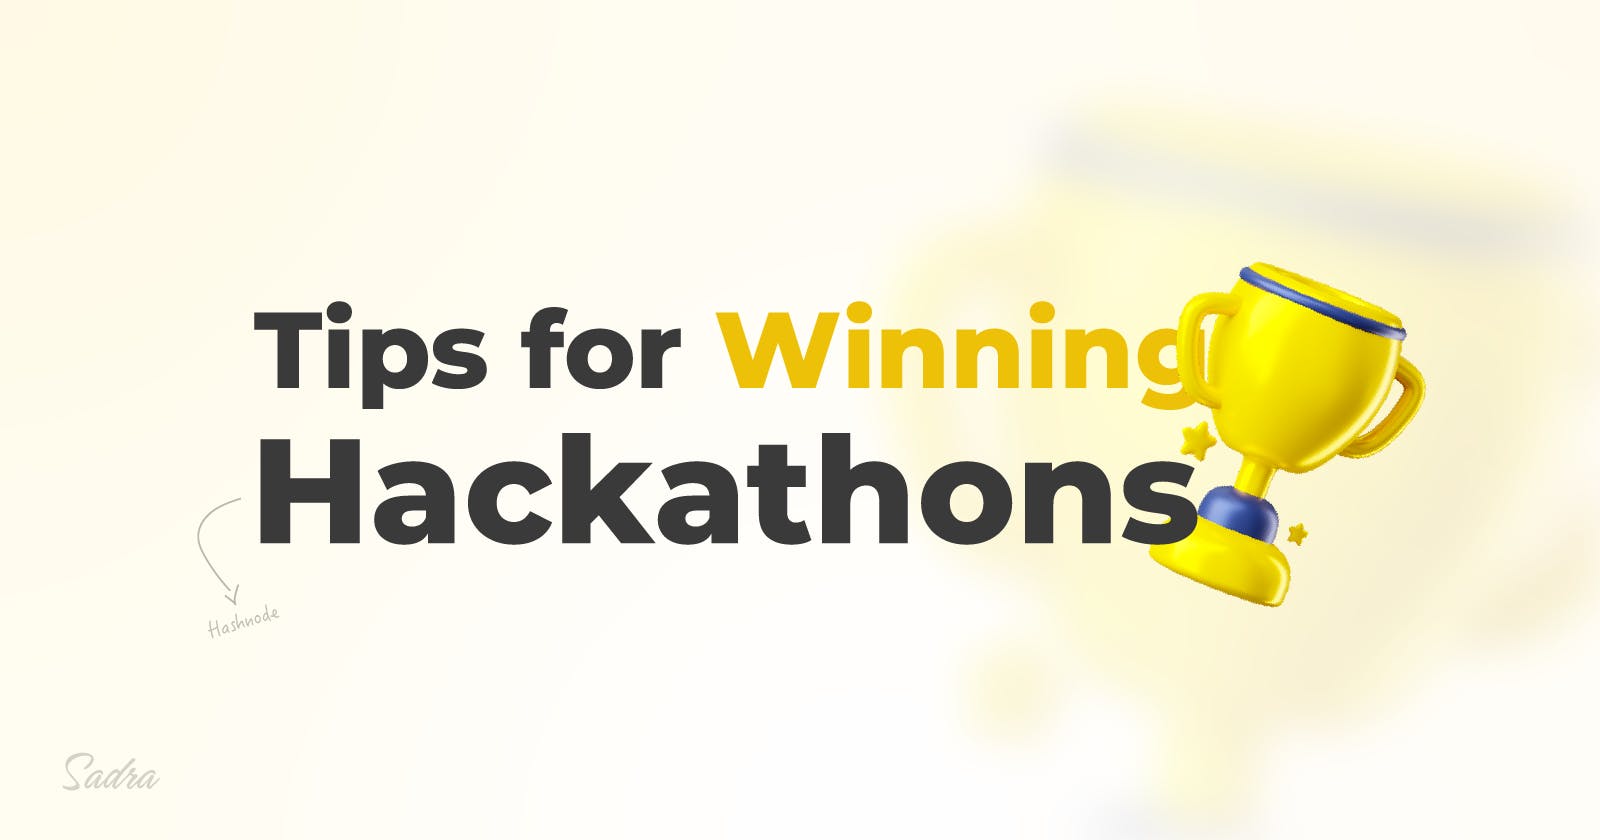 Tips for Winning Hackathons